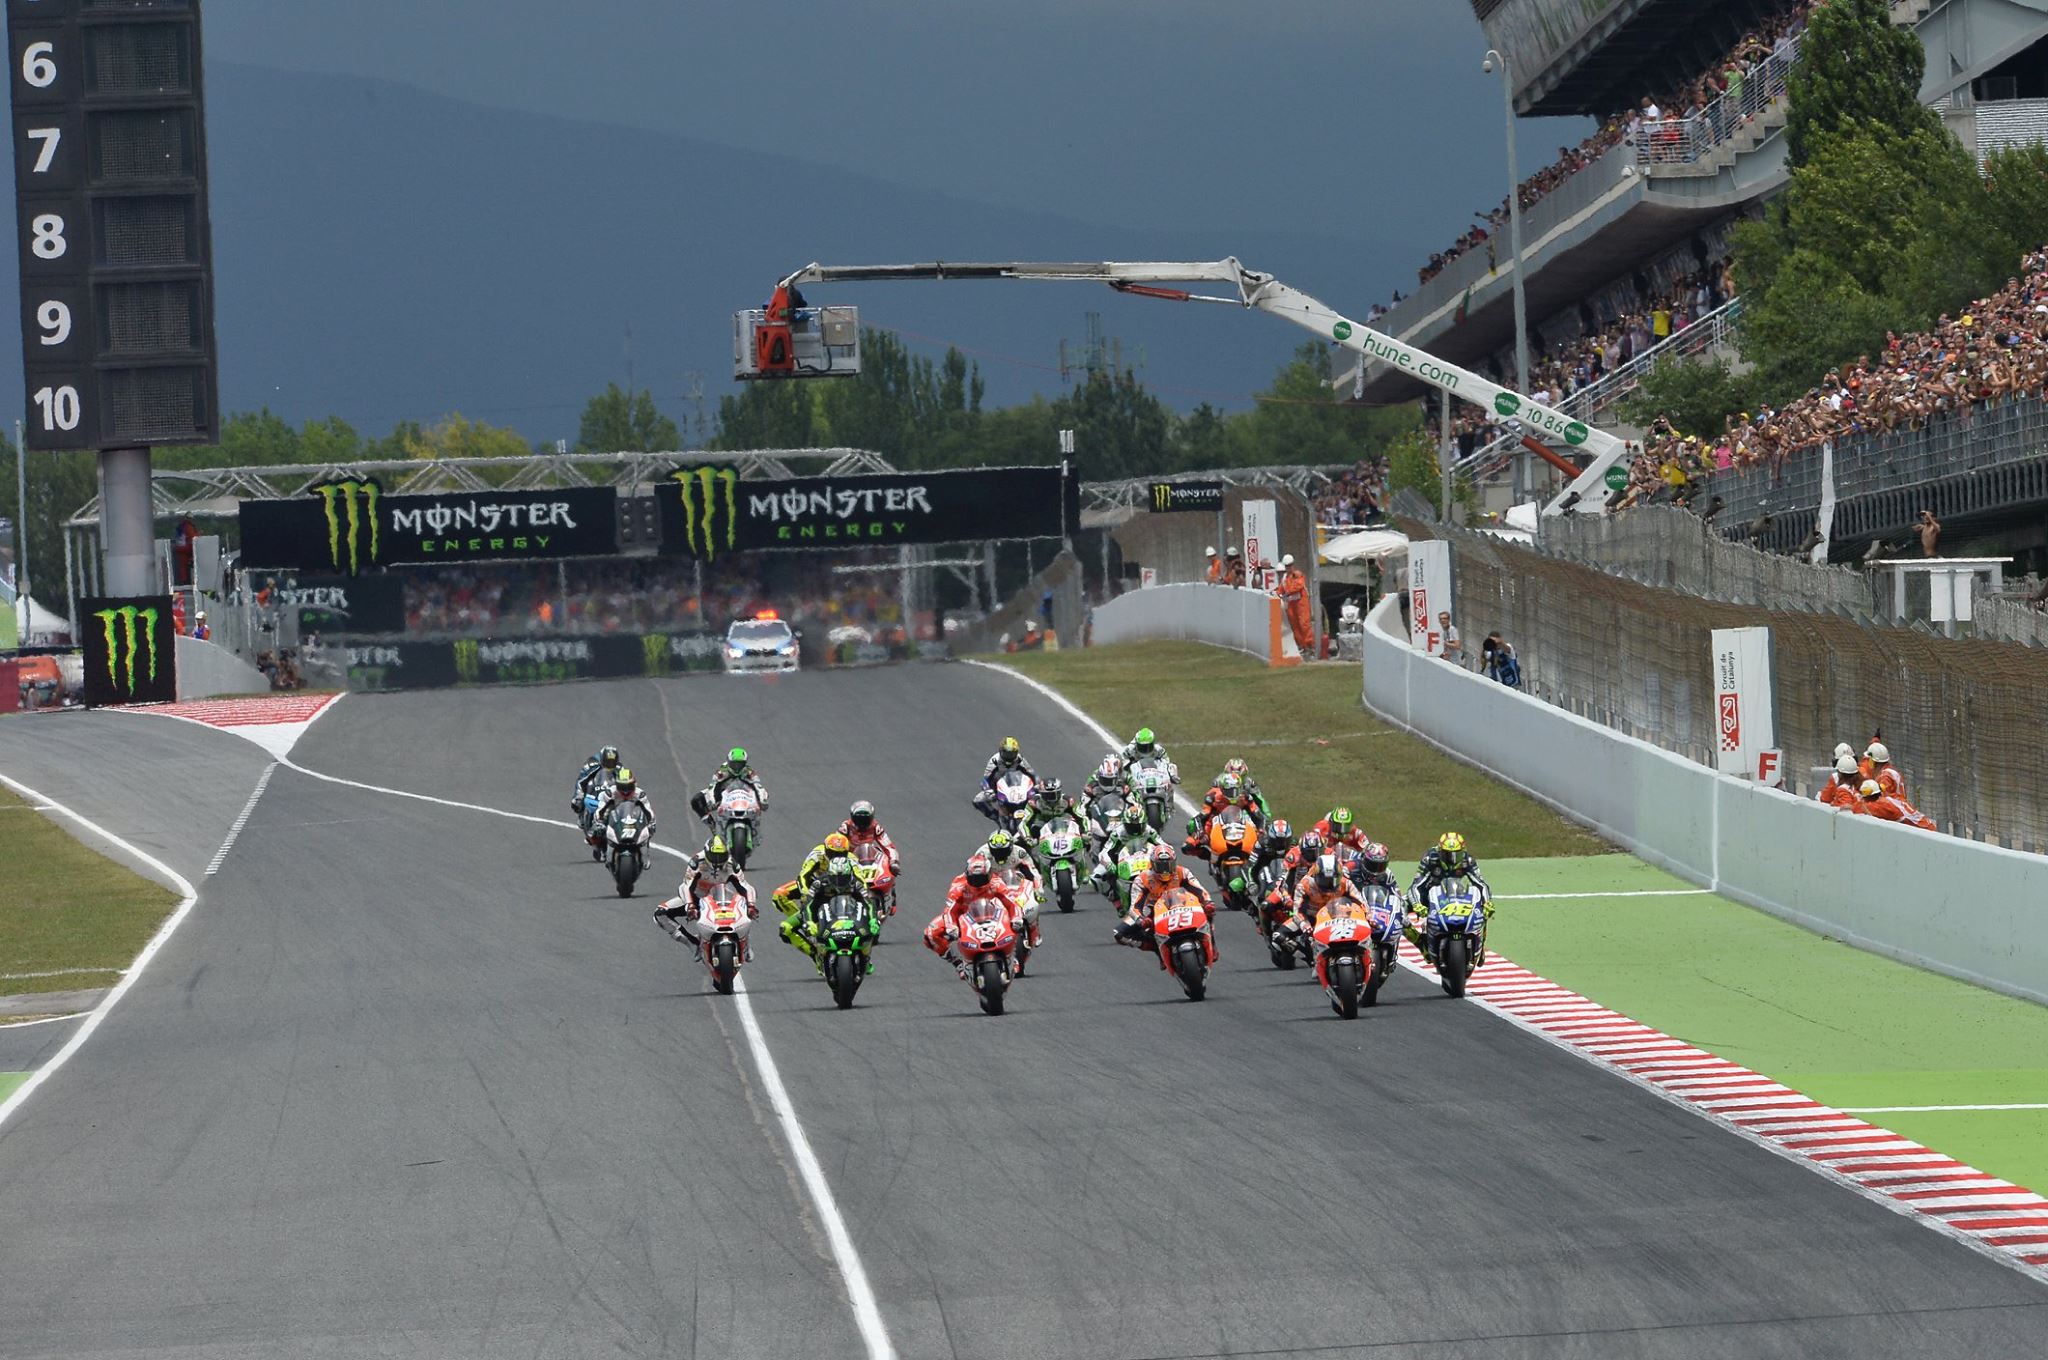 La Temporada 2015 de Moto GP inicia este fin de semana